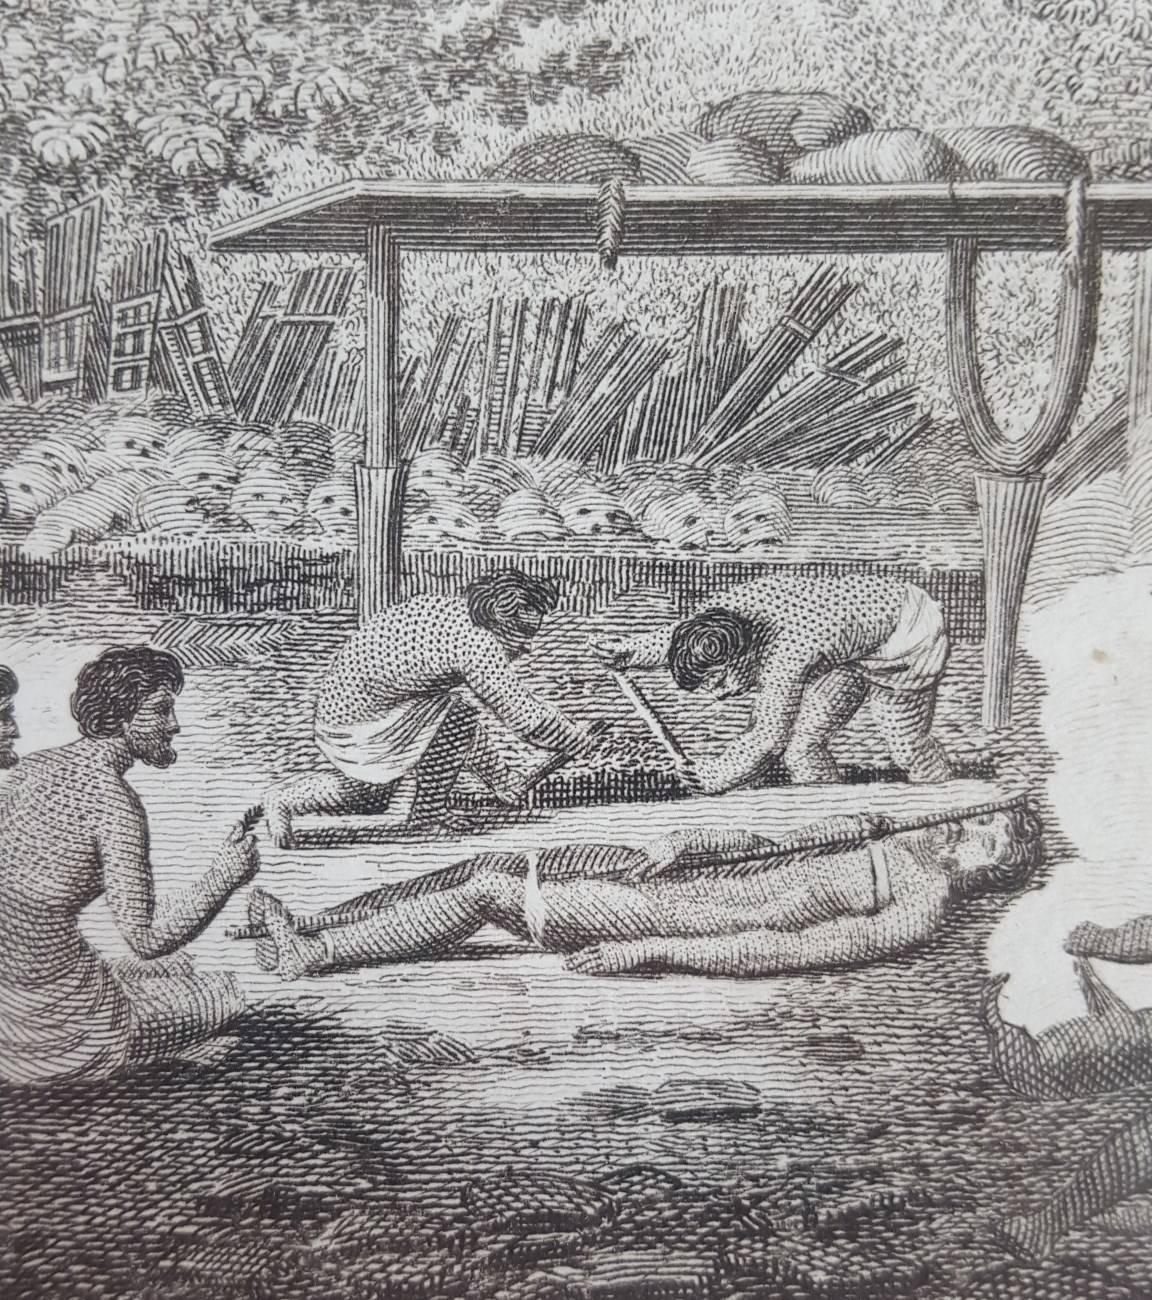 Representation of Human sacrifice with Captain Cook 2